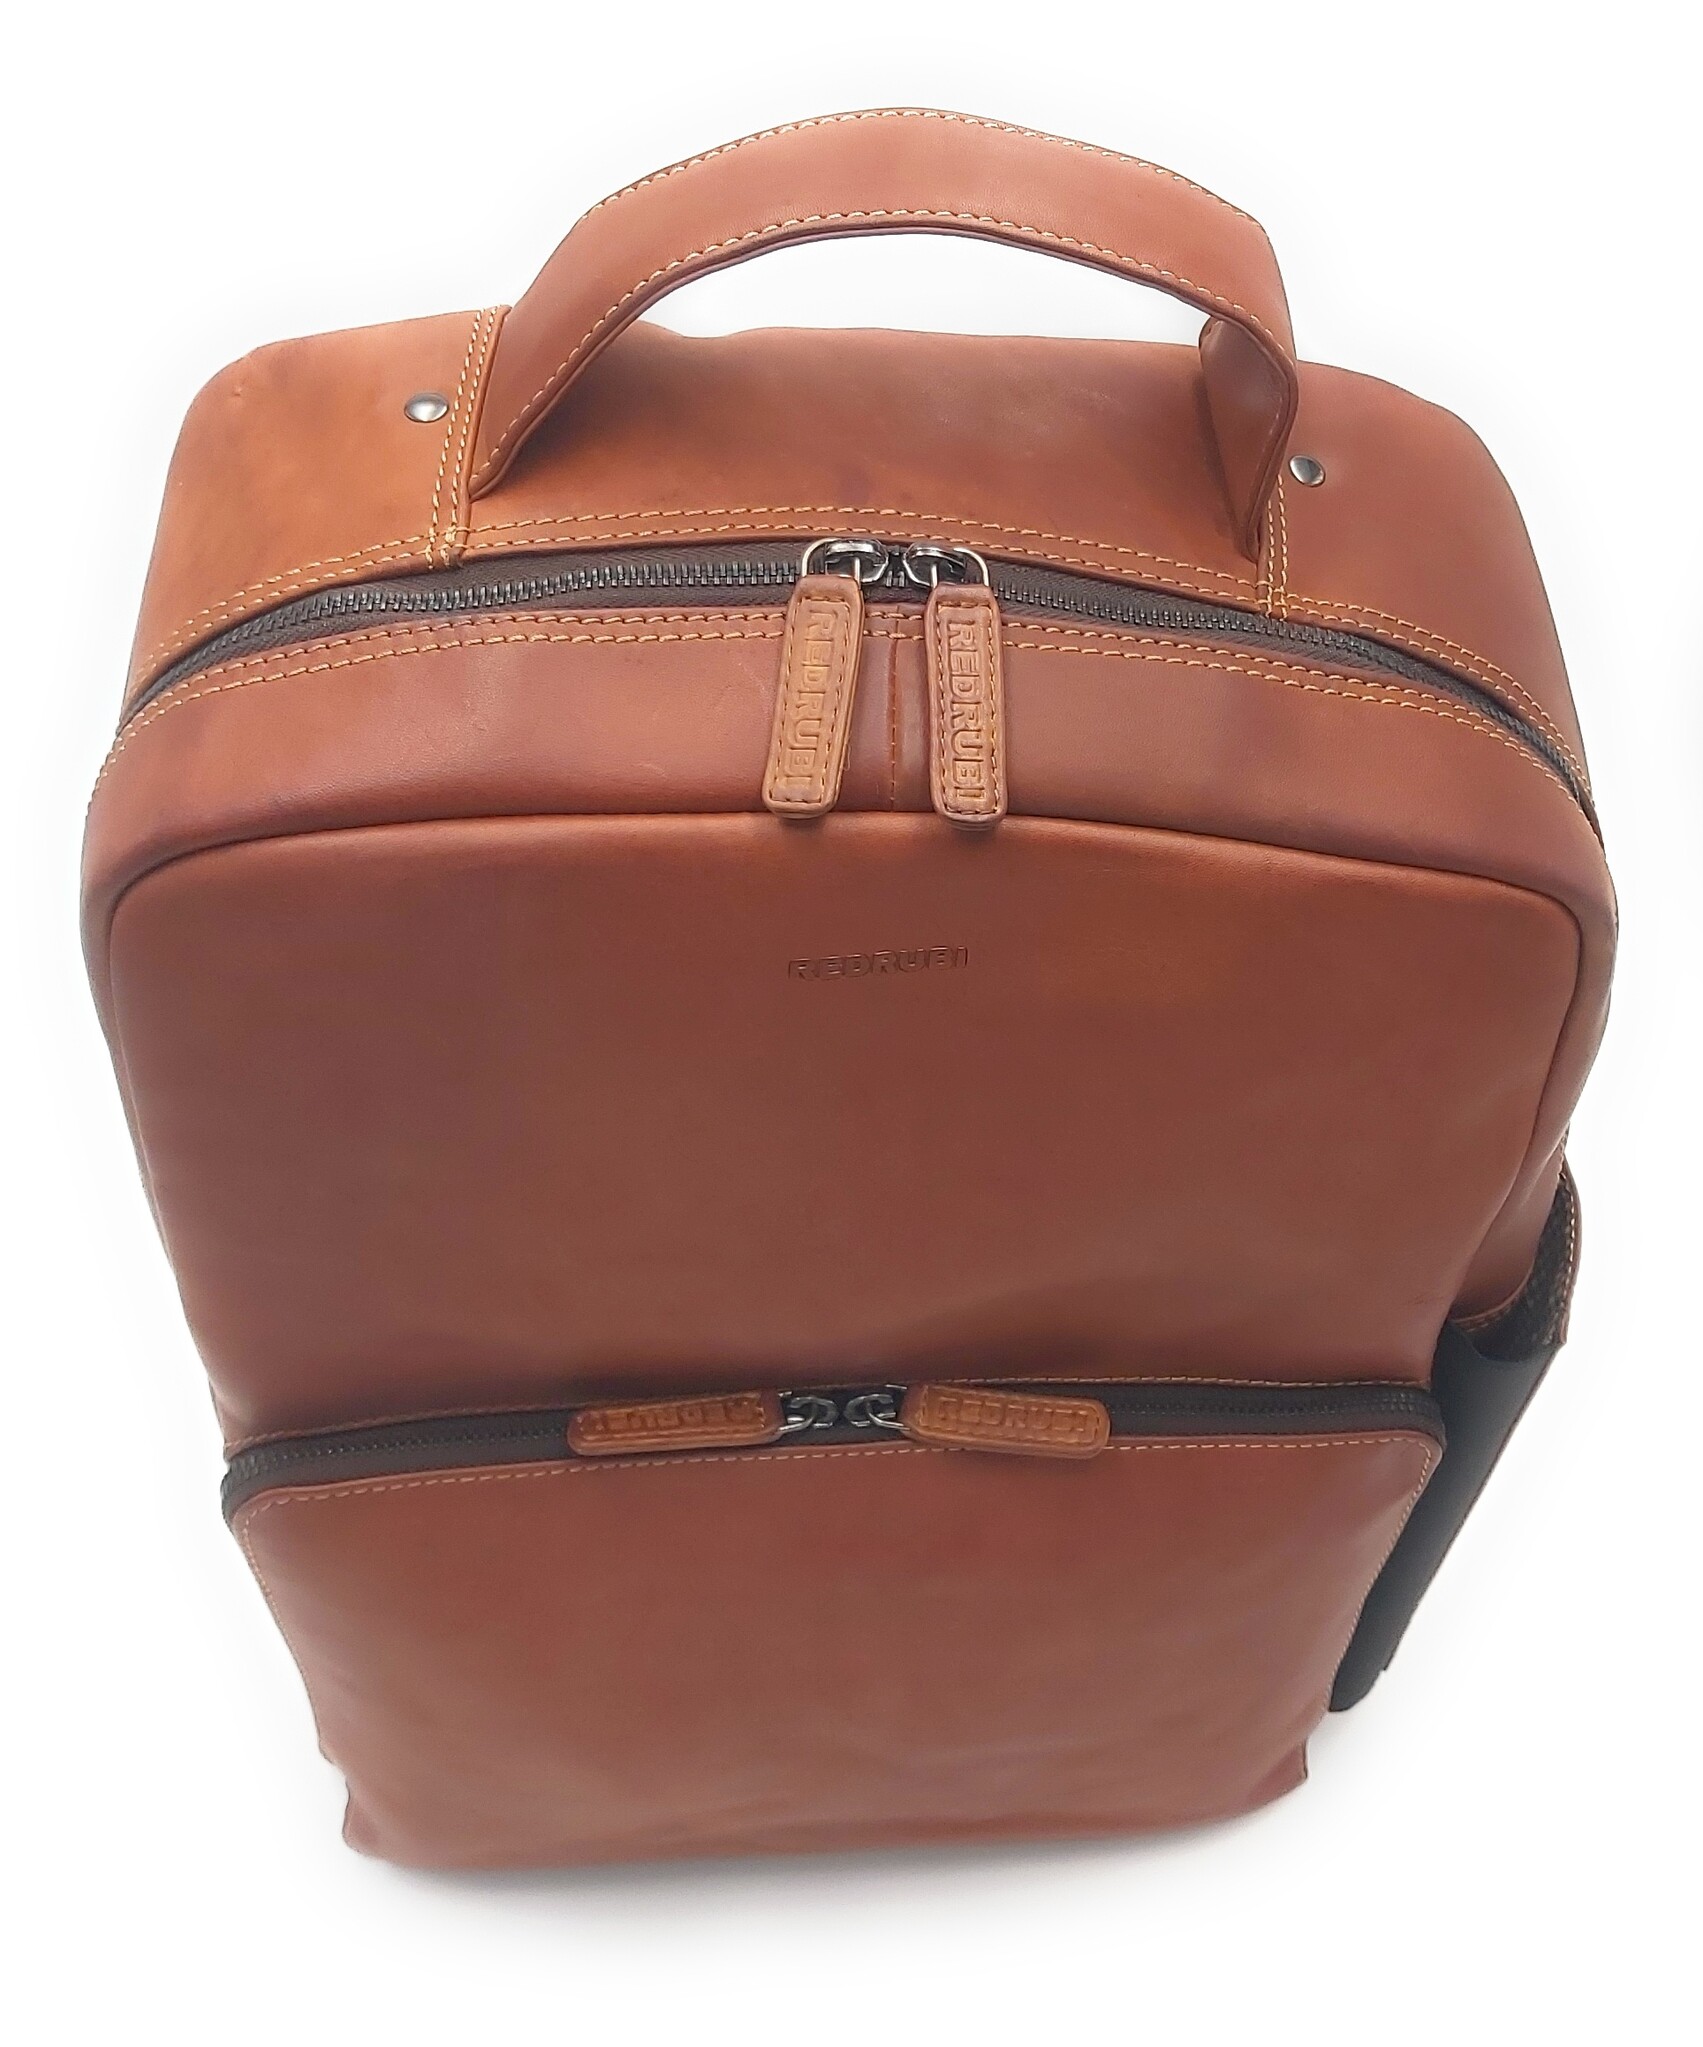 REDRUBI REDRUBI UM/7/1010 brown/cognac - genuine leather - backpack - laptop bag - sturdy - vintage leather with RFID protected - brown / cognac